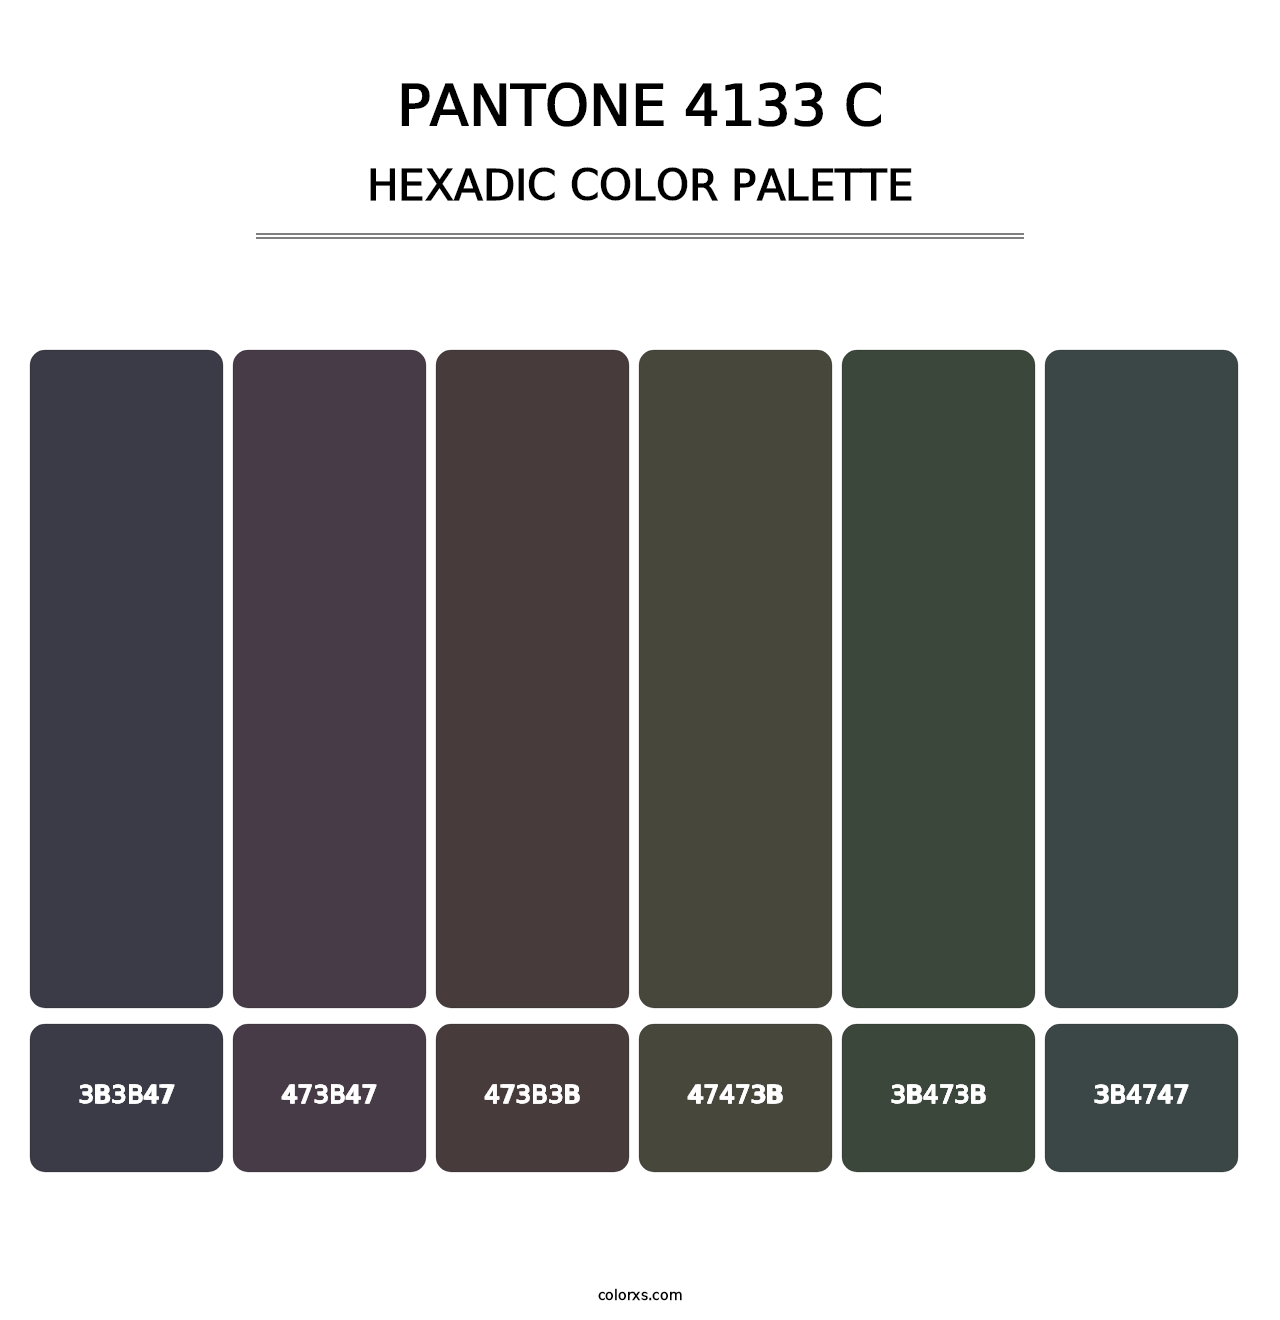 PANTONE 4133 C - Hexadic Color Palette